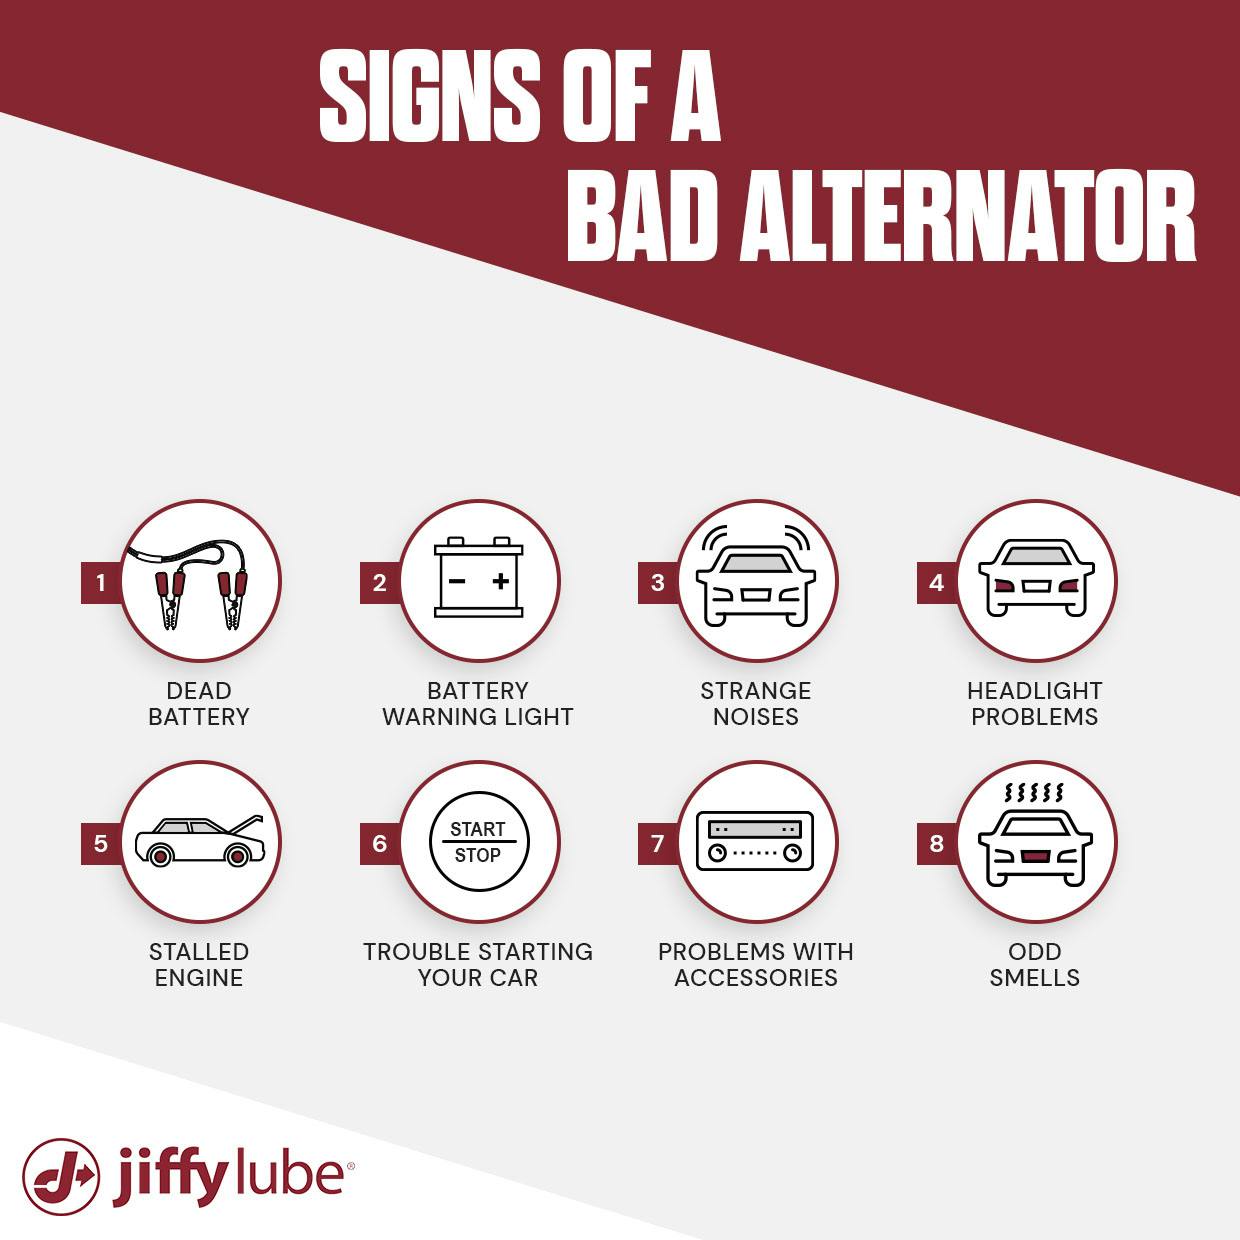 Signs of a bad alternator